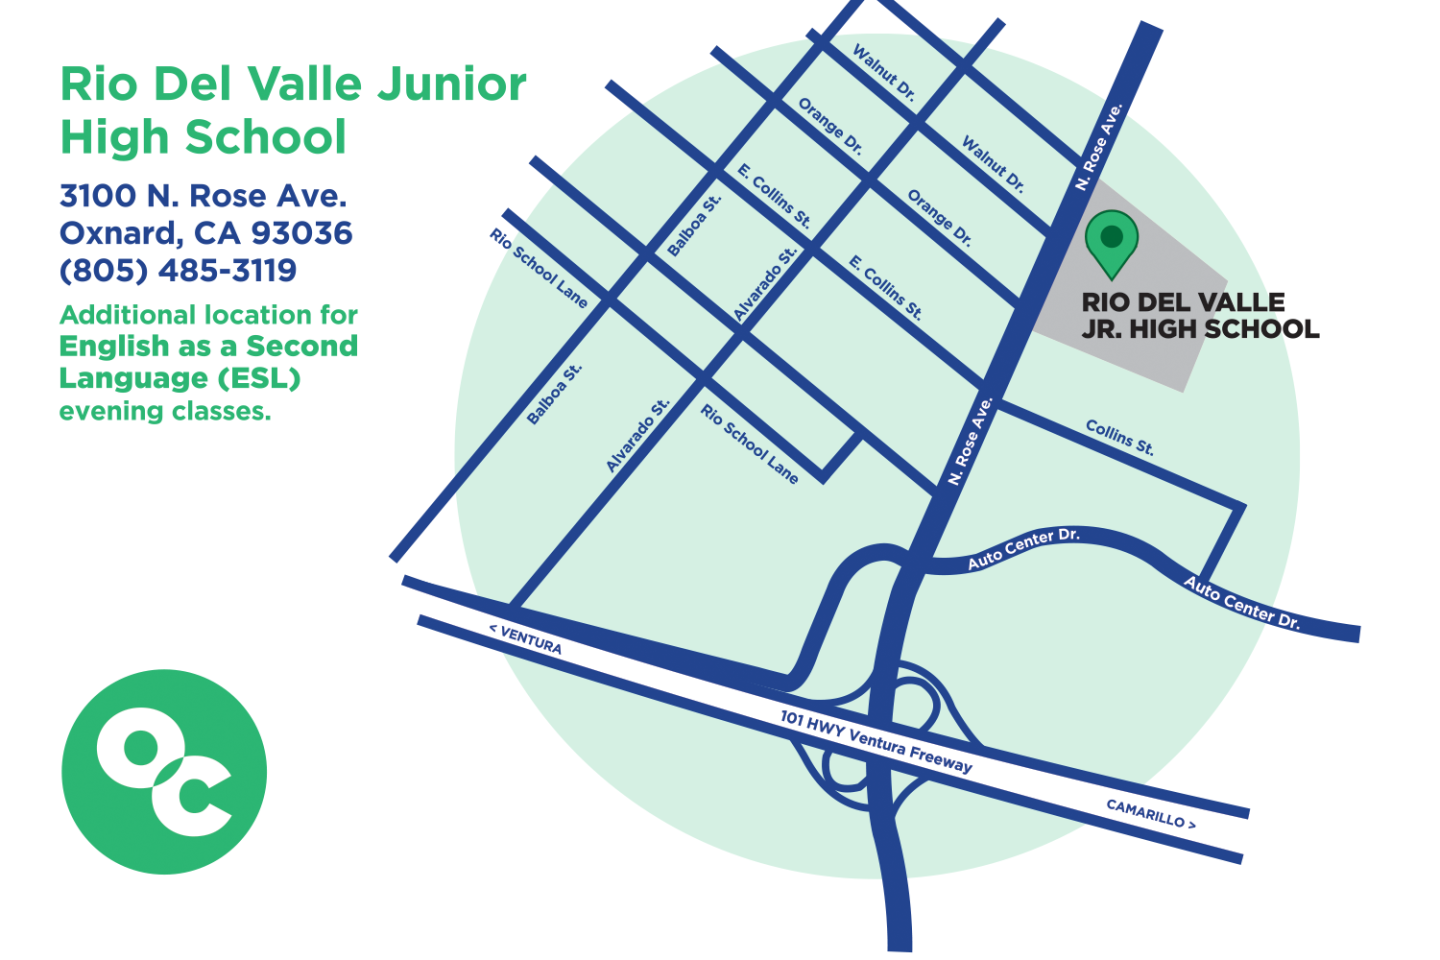 Rio Del Valle Junior High School (Additional Location for ESL Classes)